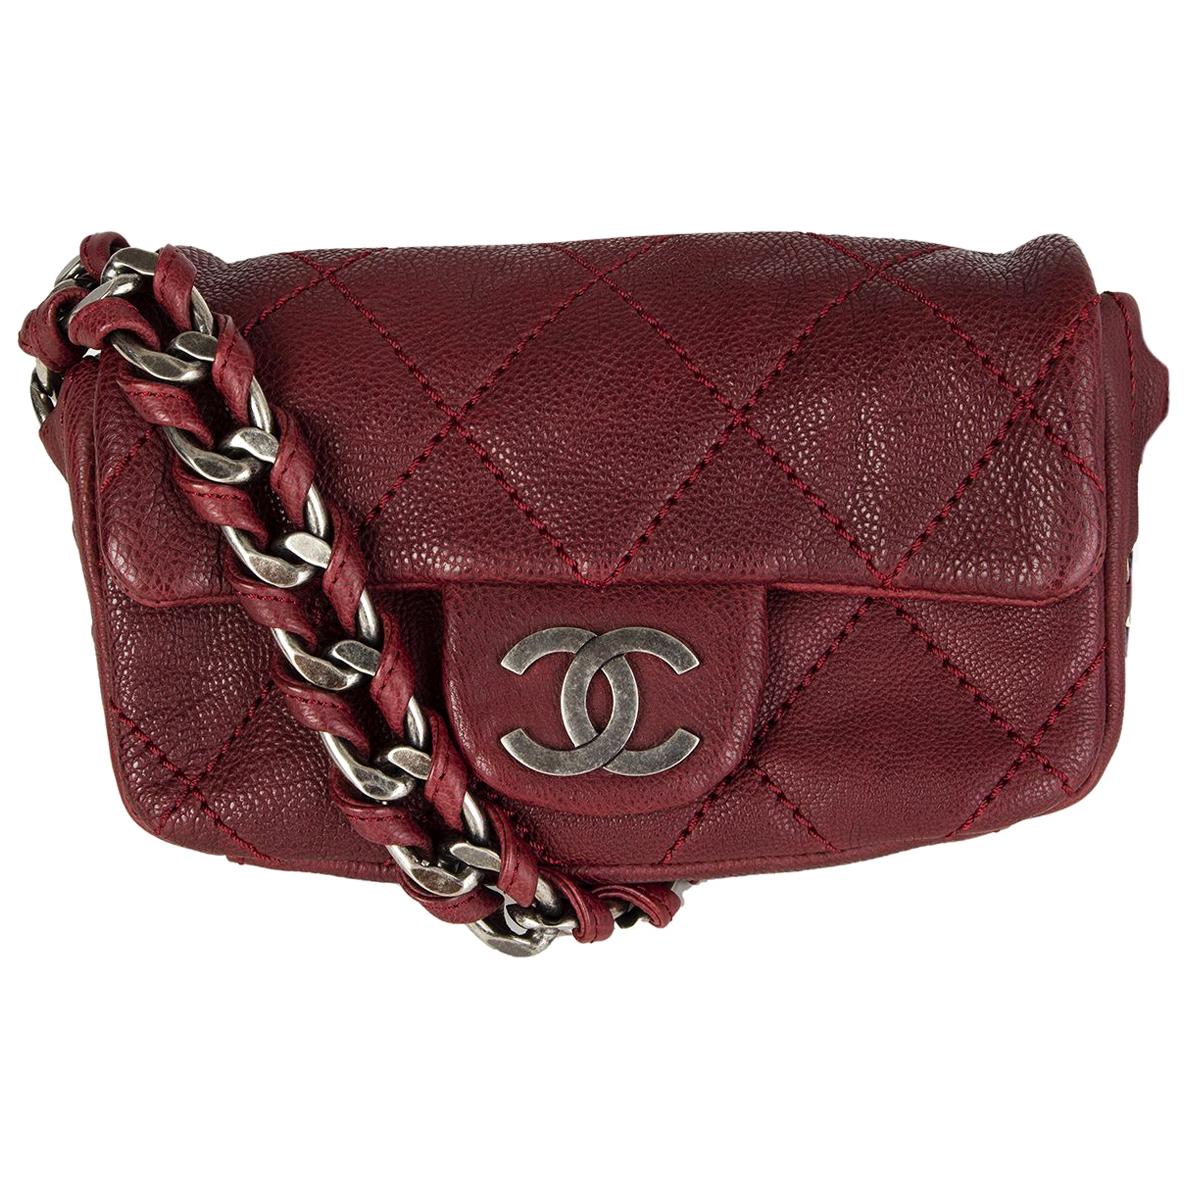 Chanel burgundy washed Caviar leather MODERN CHAIN MINI FLAP Shoulder Bag